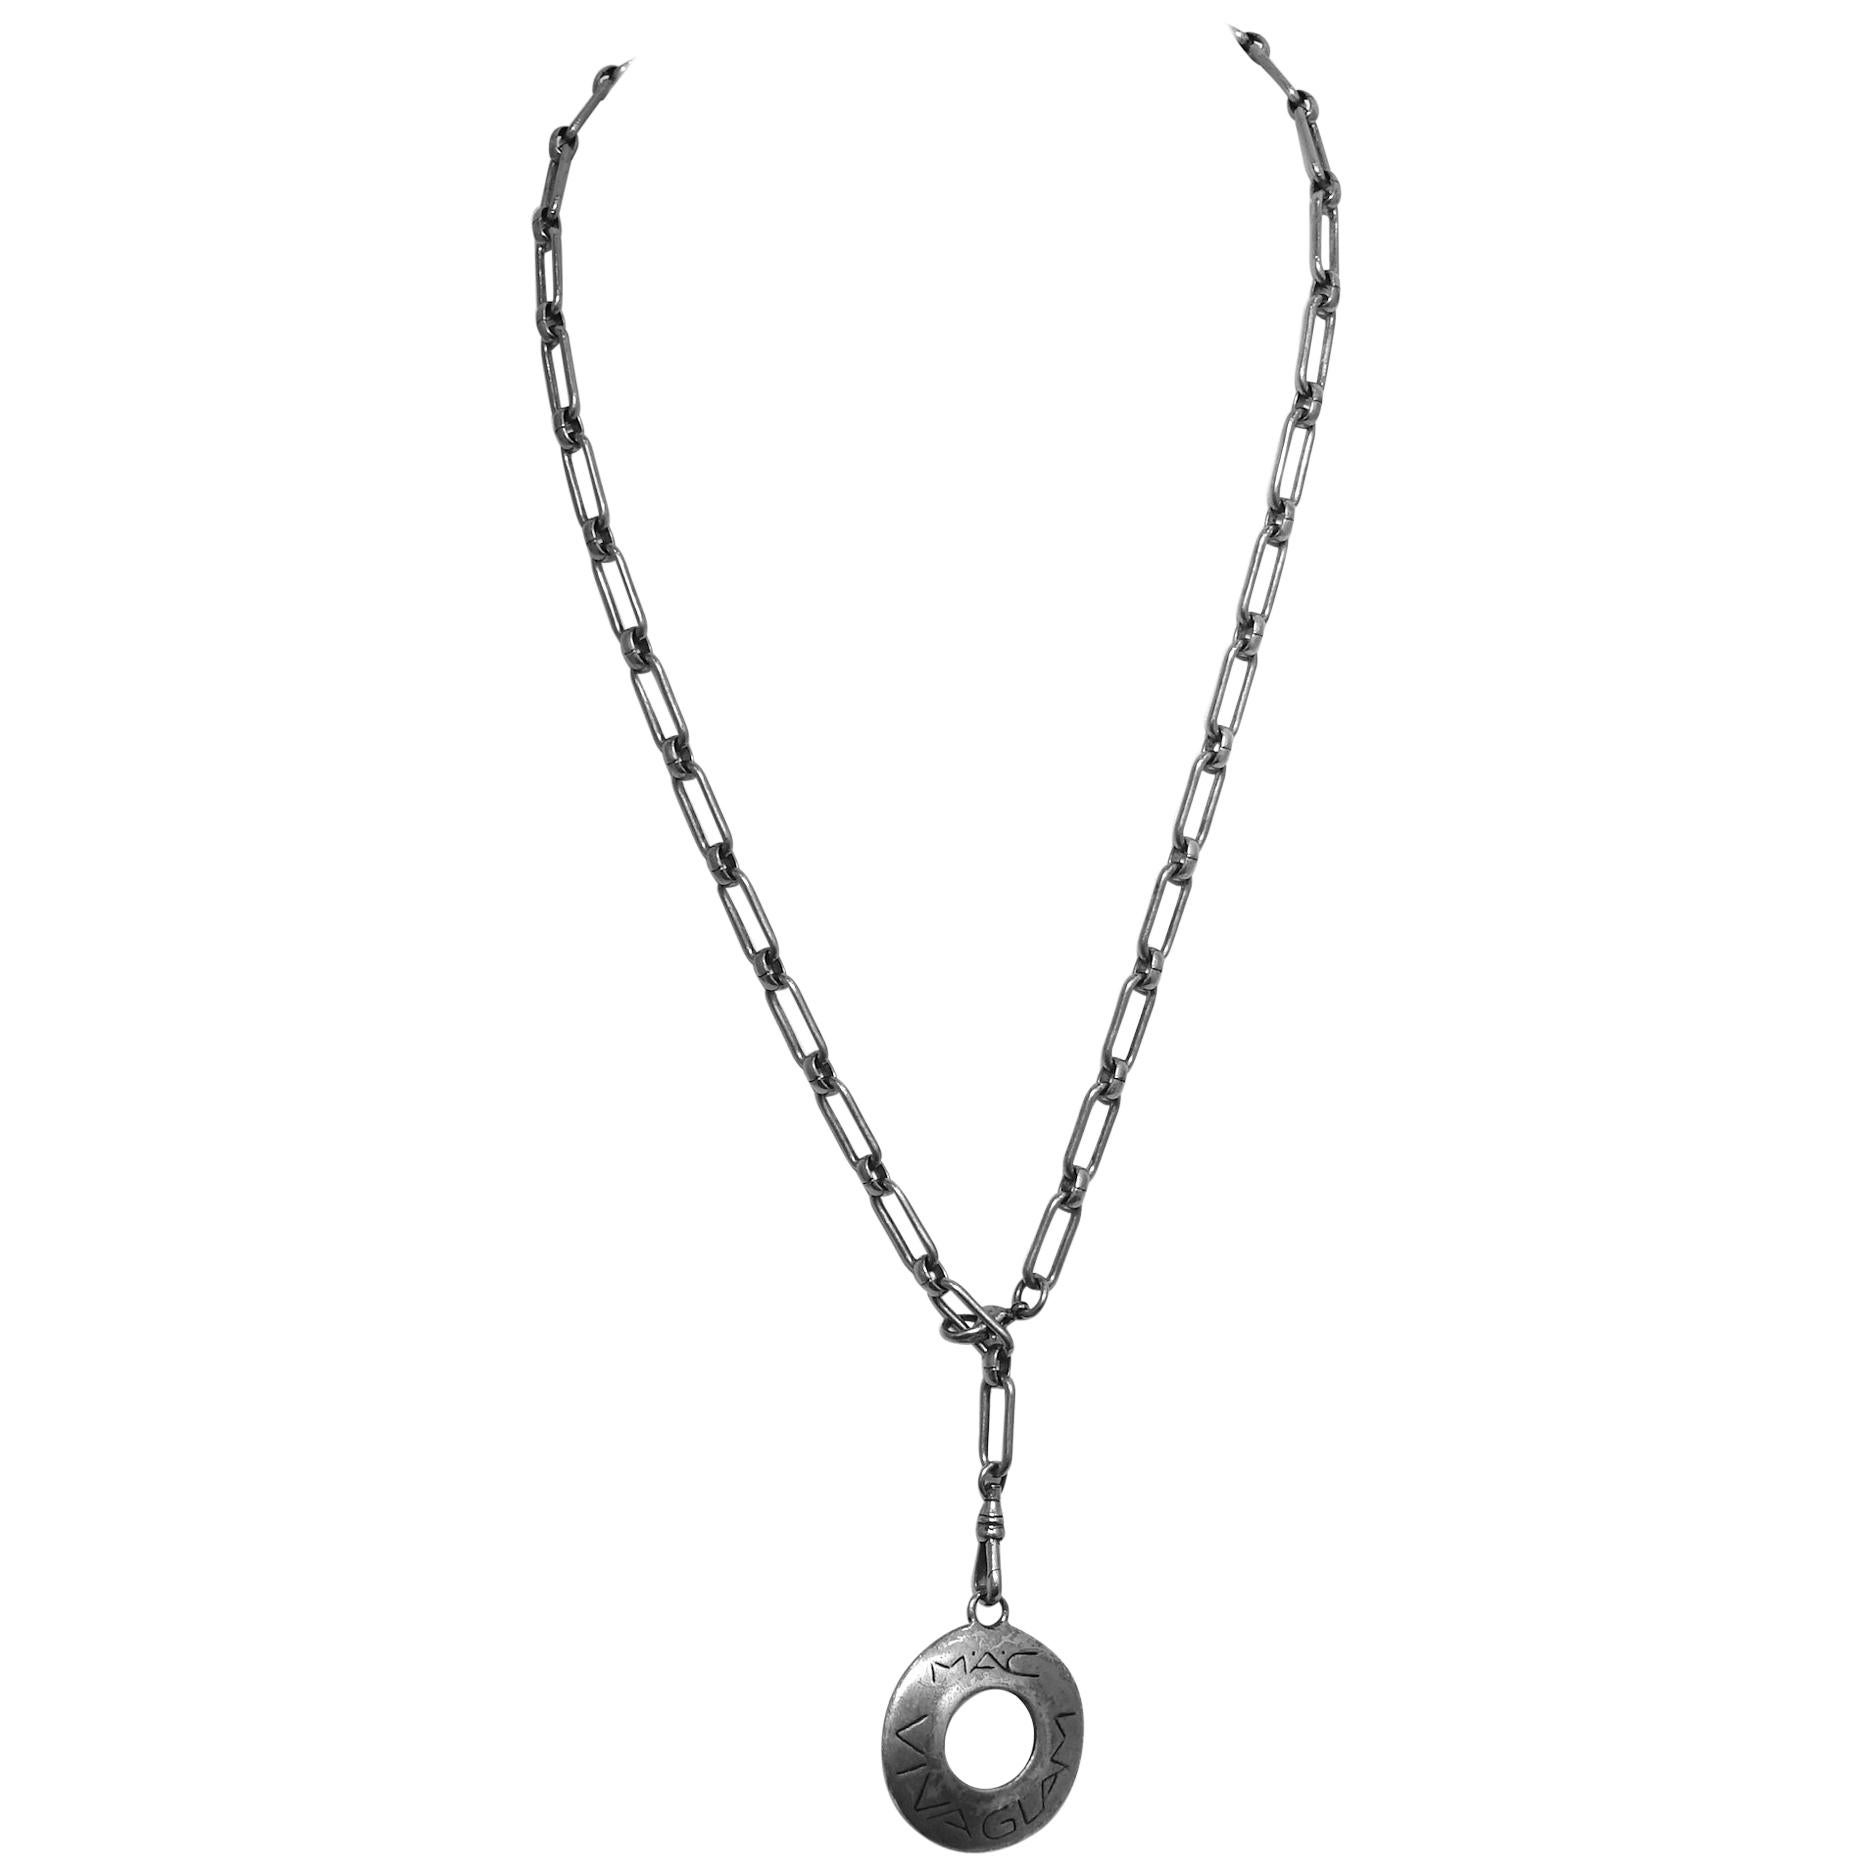 Vintage Signed “Mac Viva Glam 96” Pendant Necklace